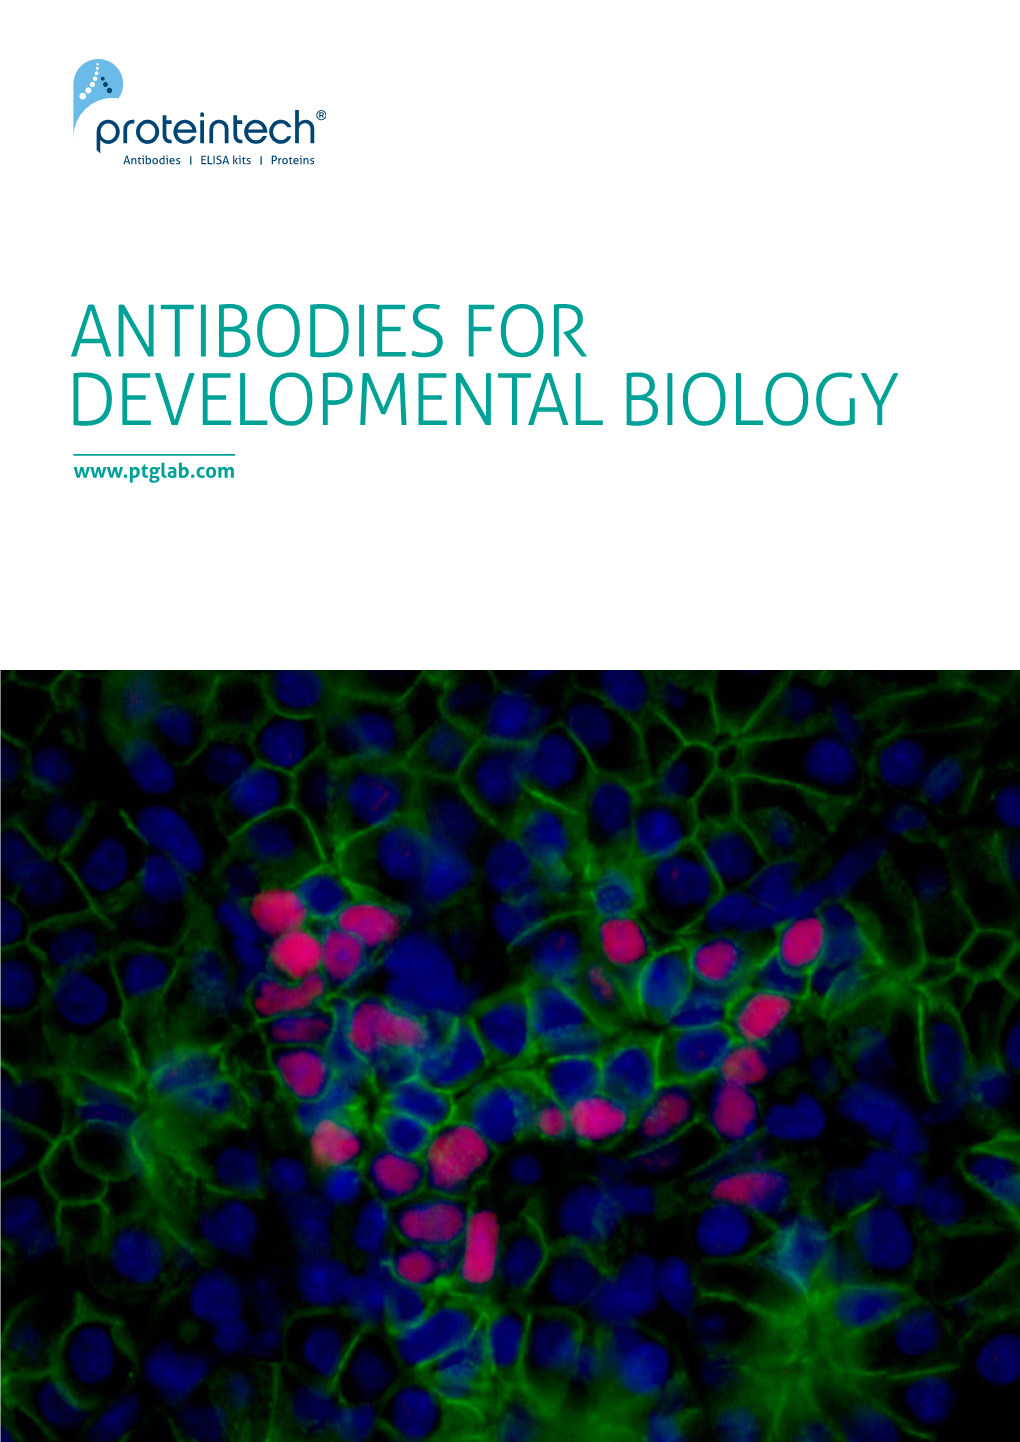 DEVELOPMENTAL BIOLOGY 2 Antibodies for Developmental Biology